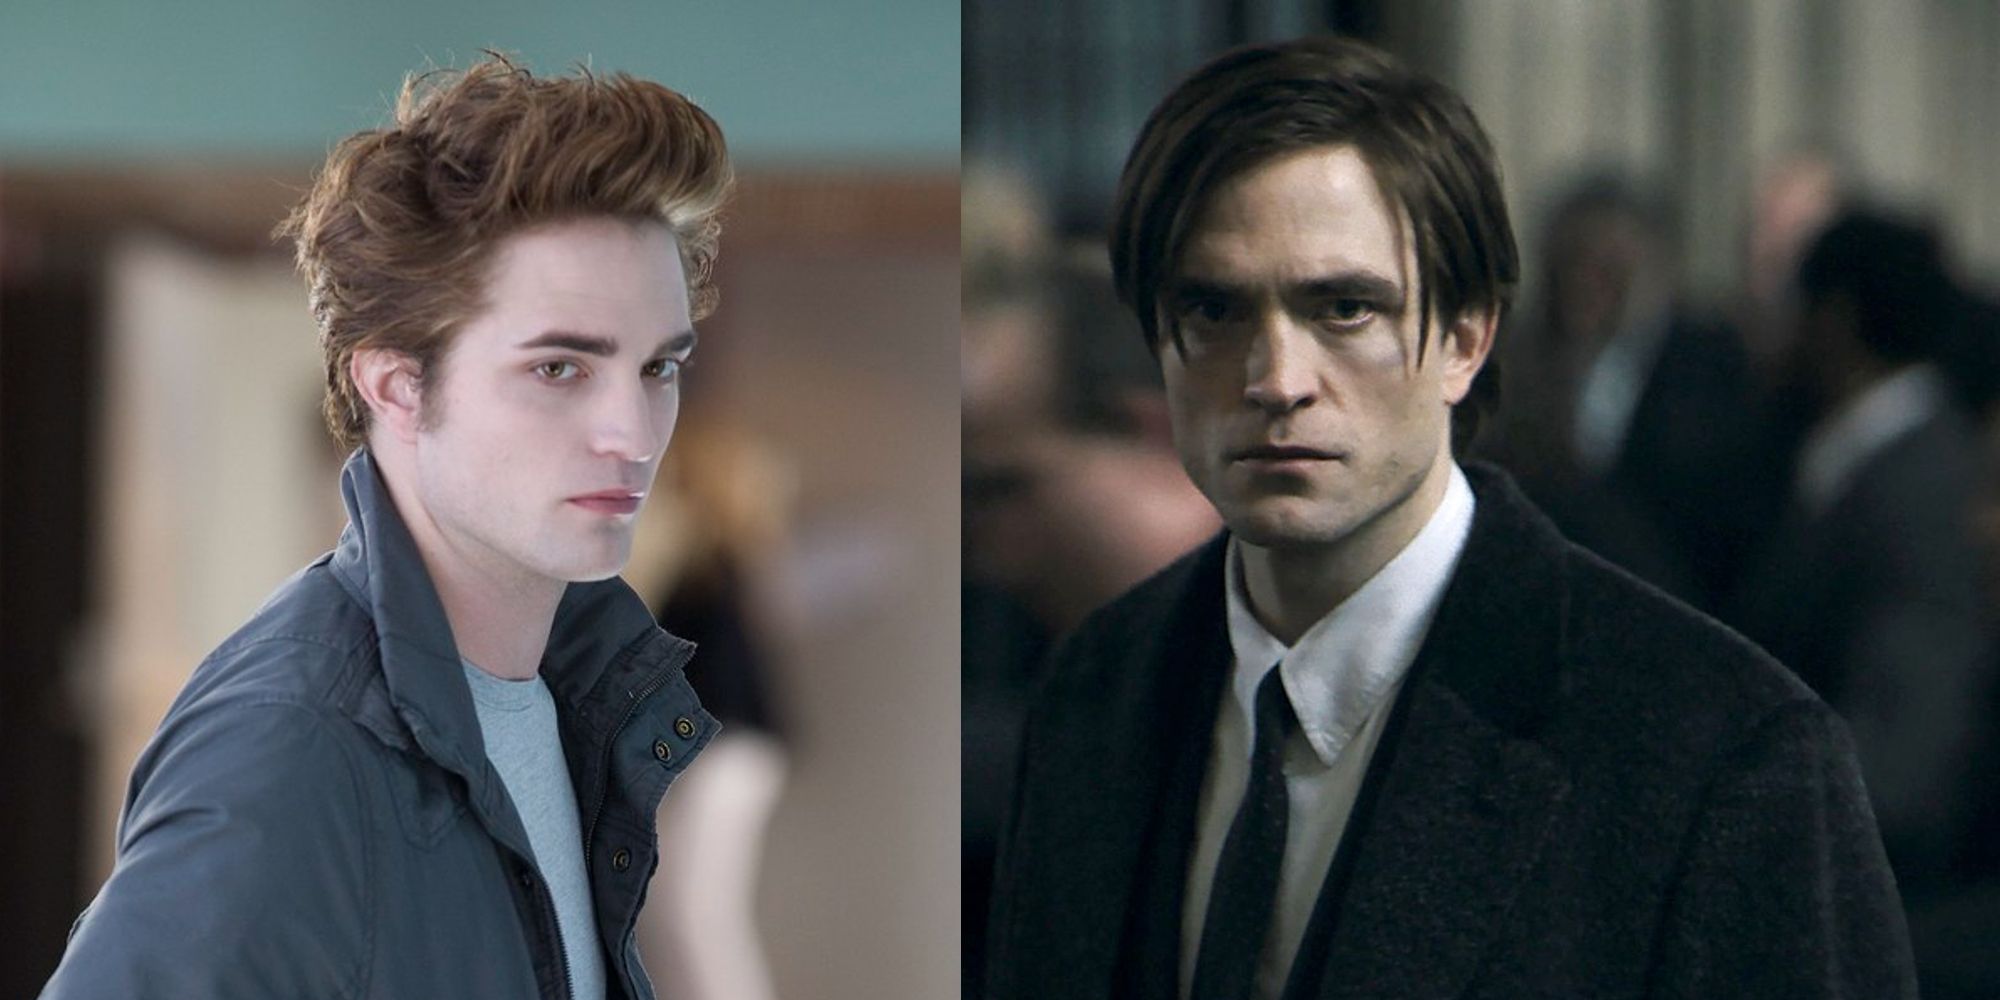 Edward Cullen and Batman Brooding